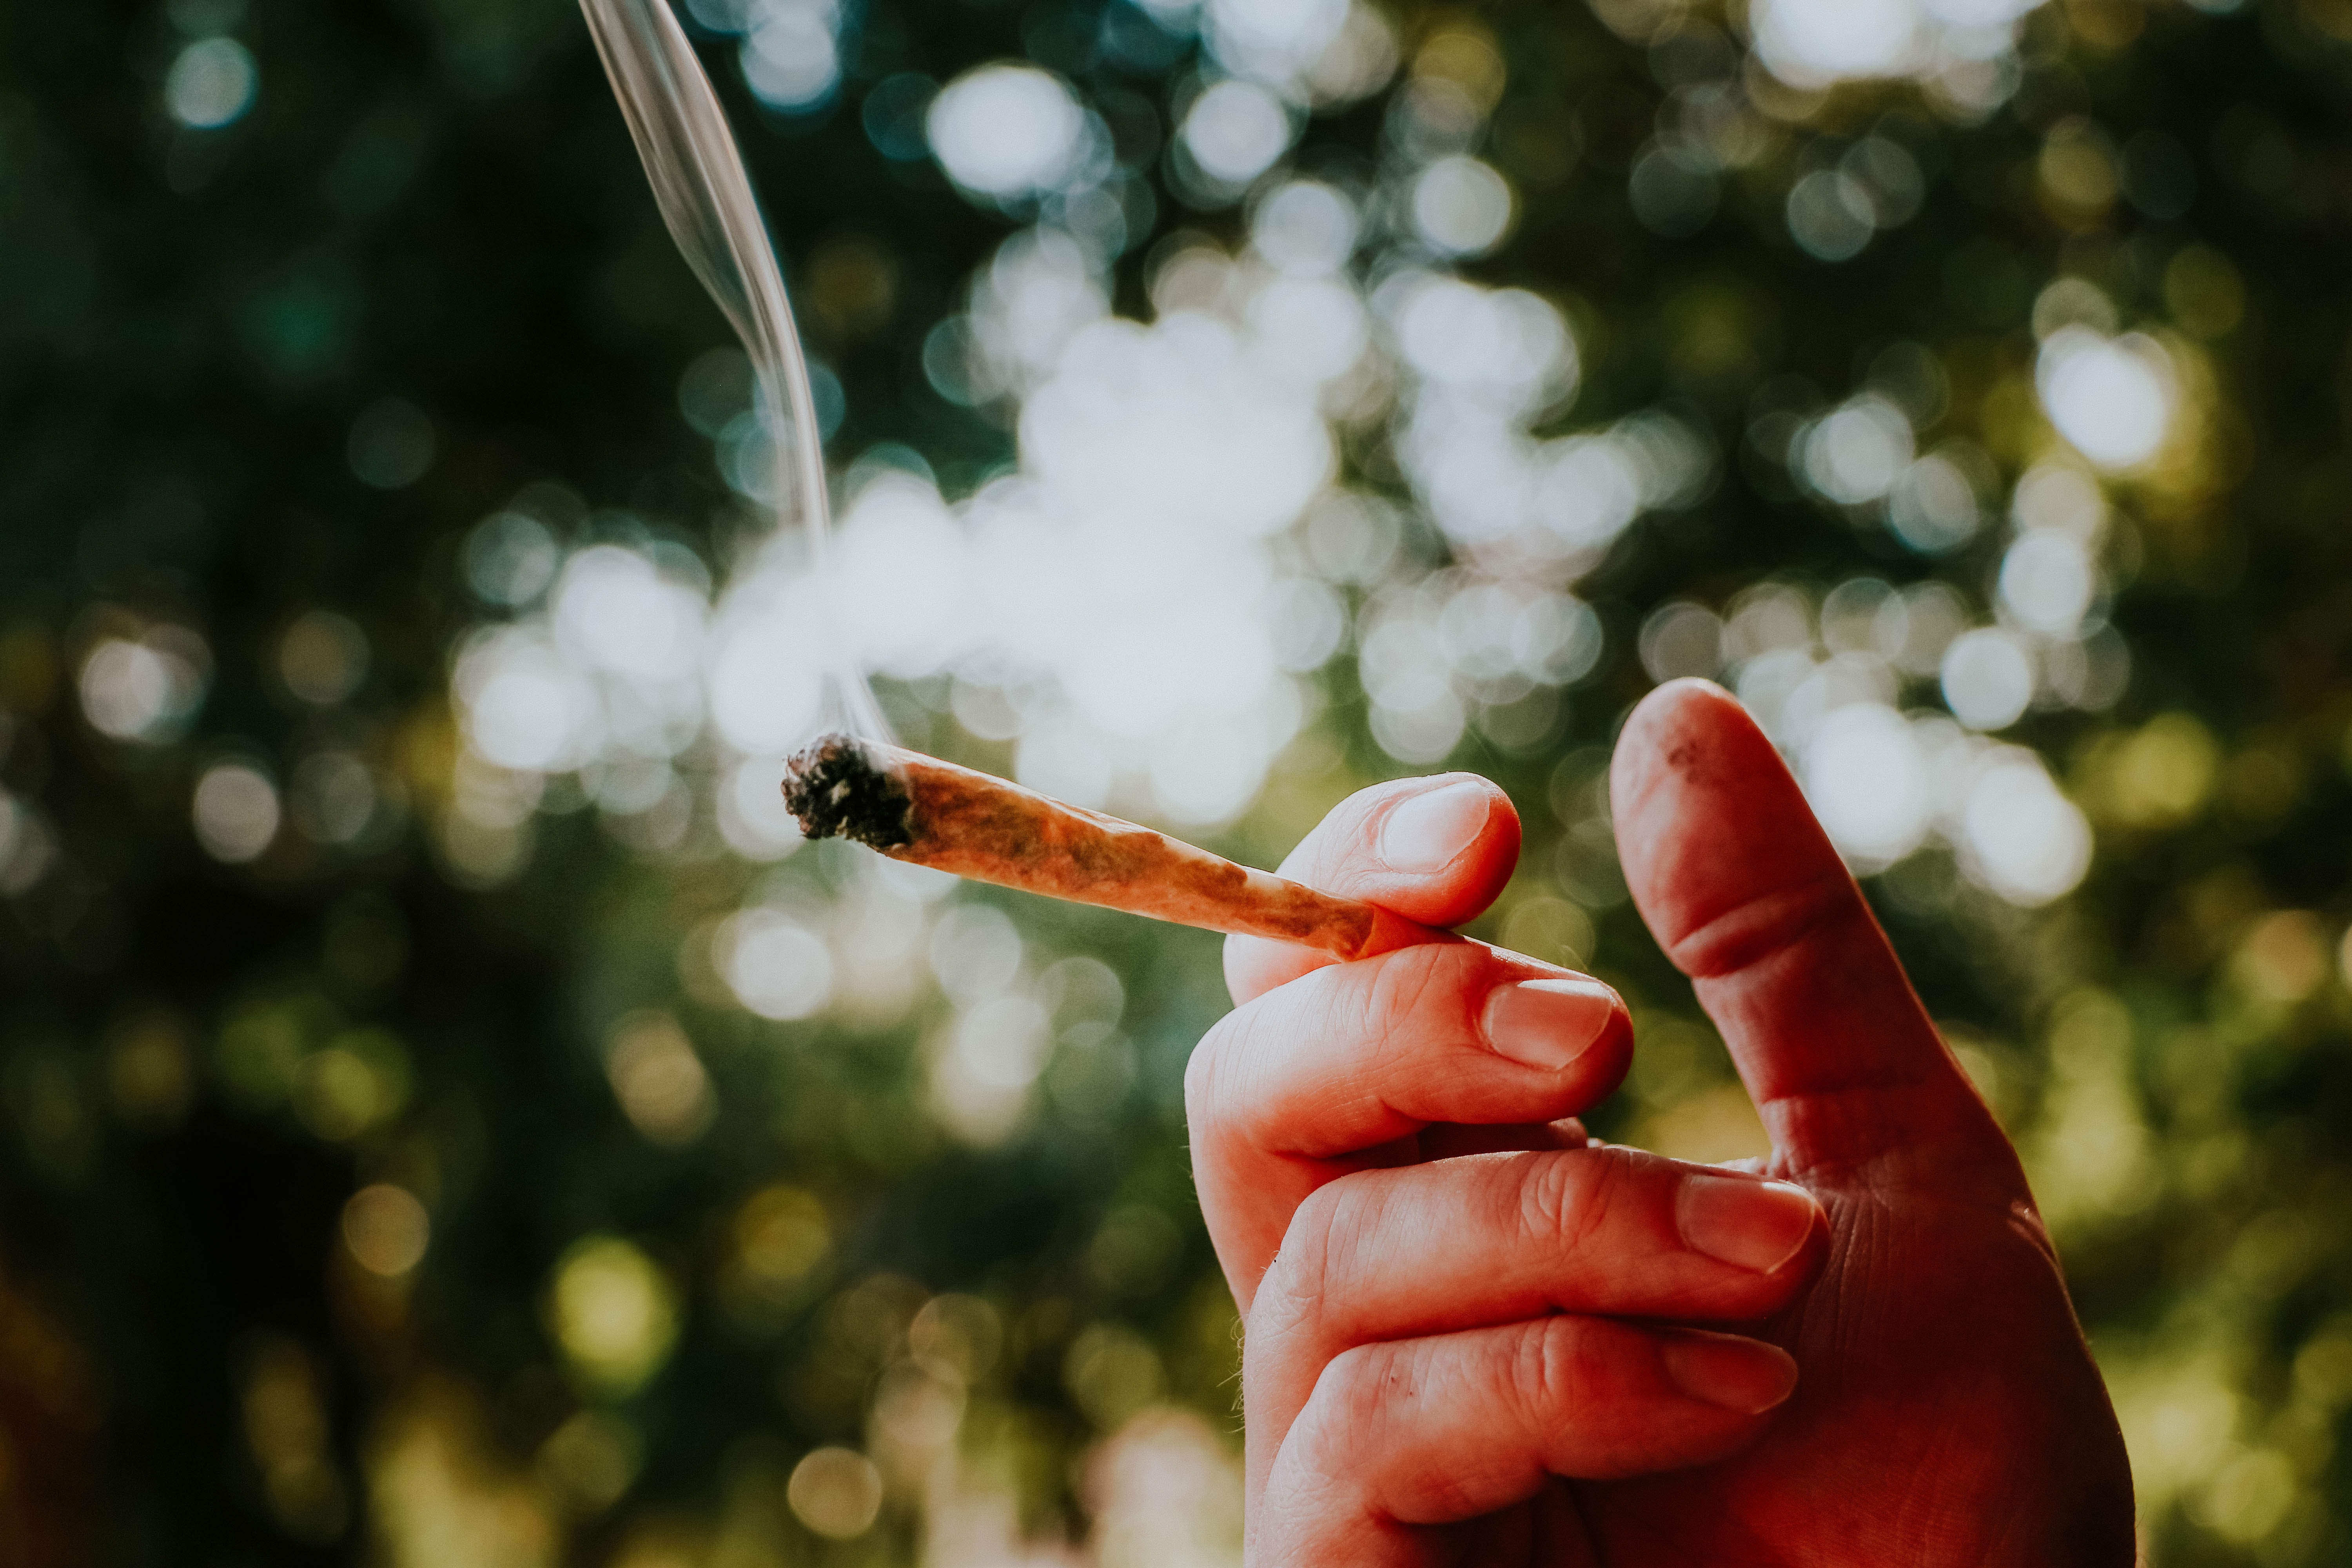 Photo of hand holding a marijuana cigarette.